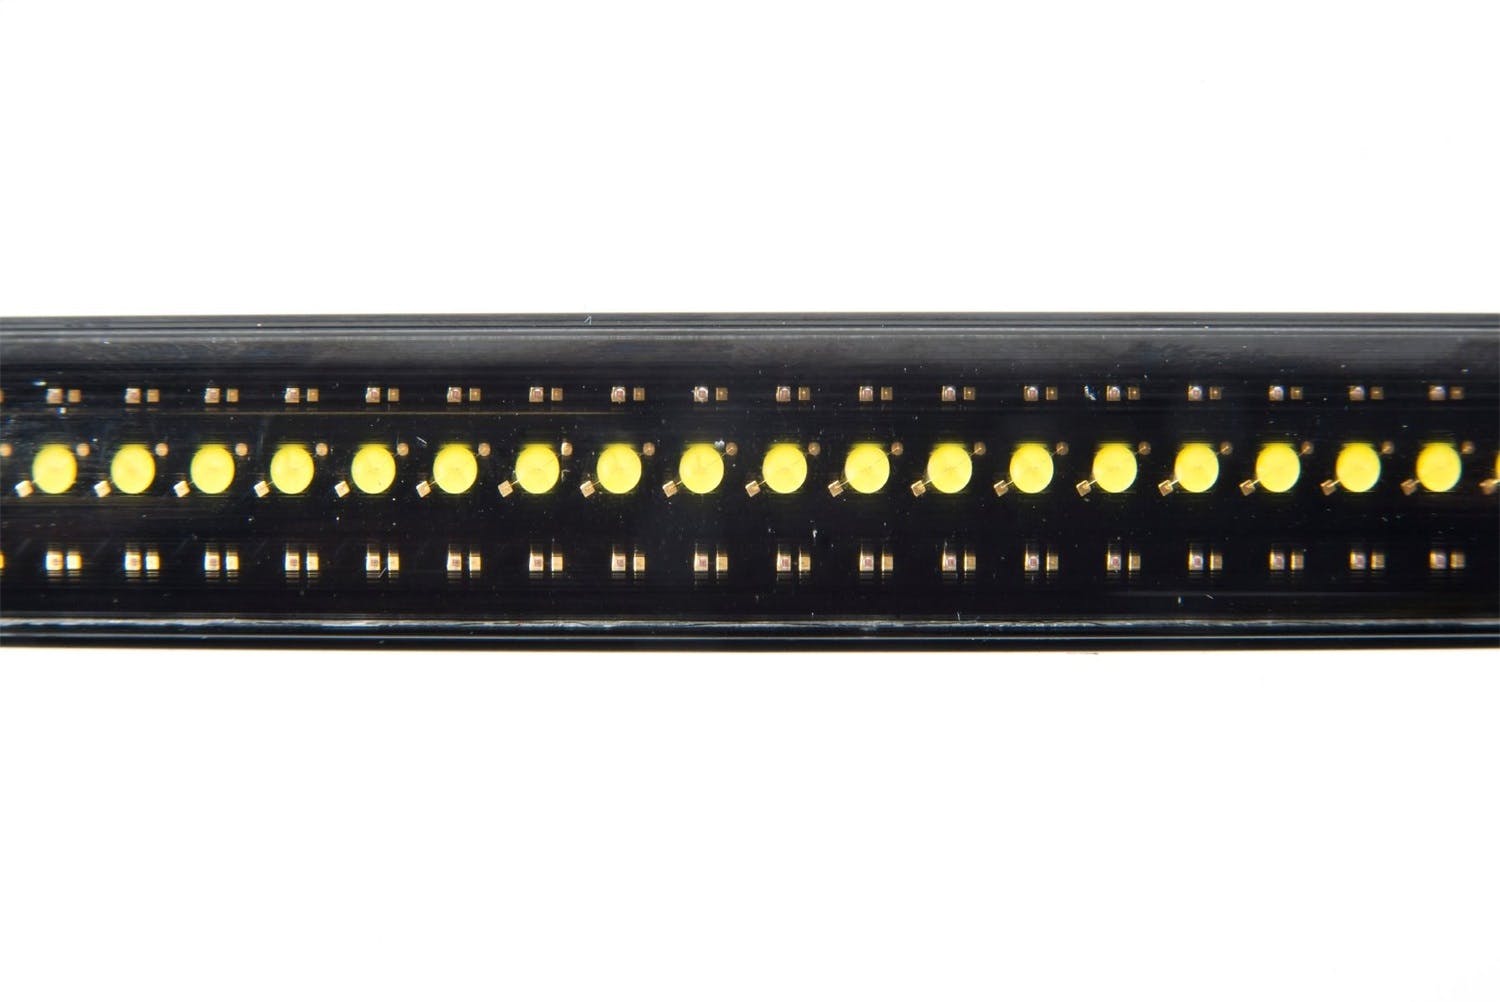 Putco 92009-36 36 inch Blade LED Light Bar